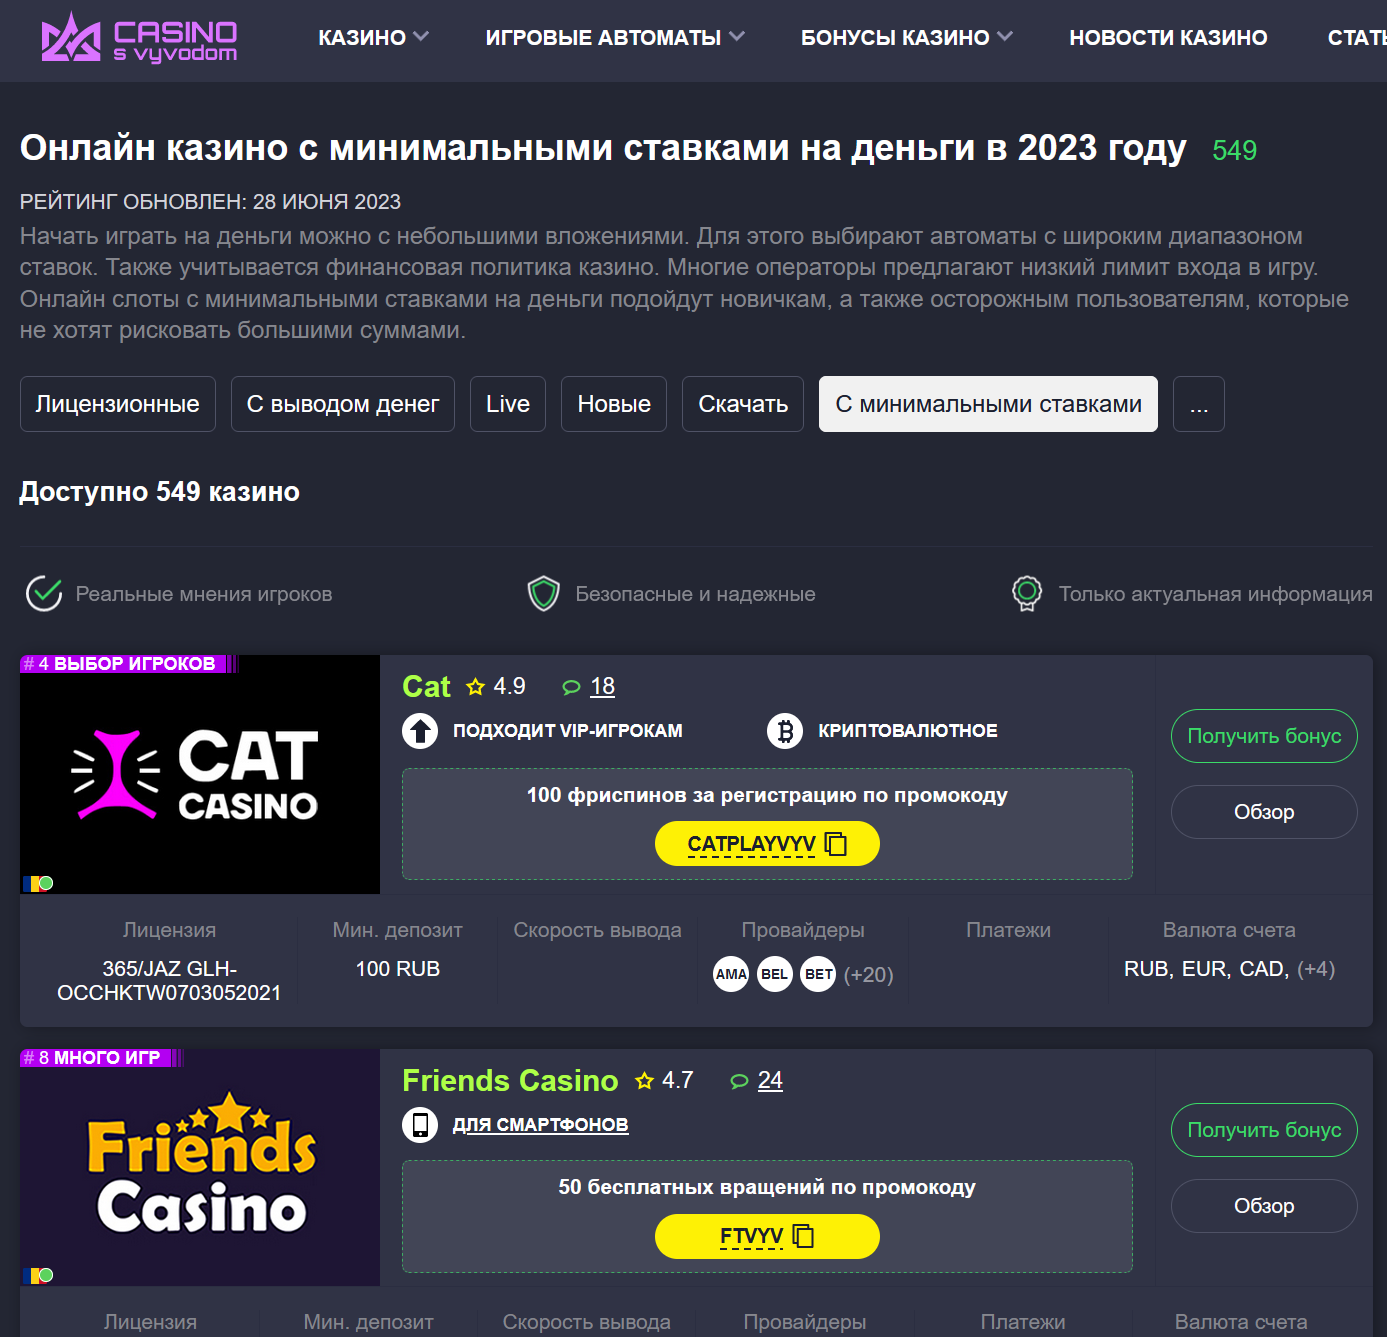 Full version of Android Casino table games game apk Какие онлайн казино с минимальными ставками надежные для игры? for tablet and phone.